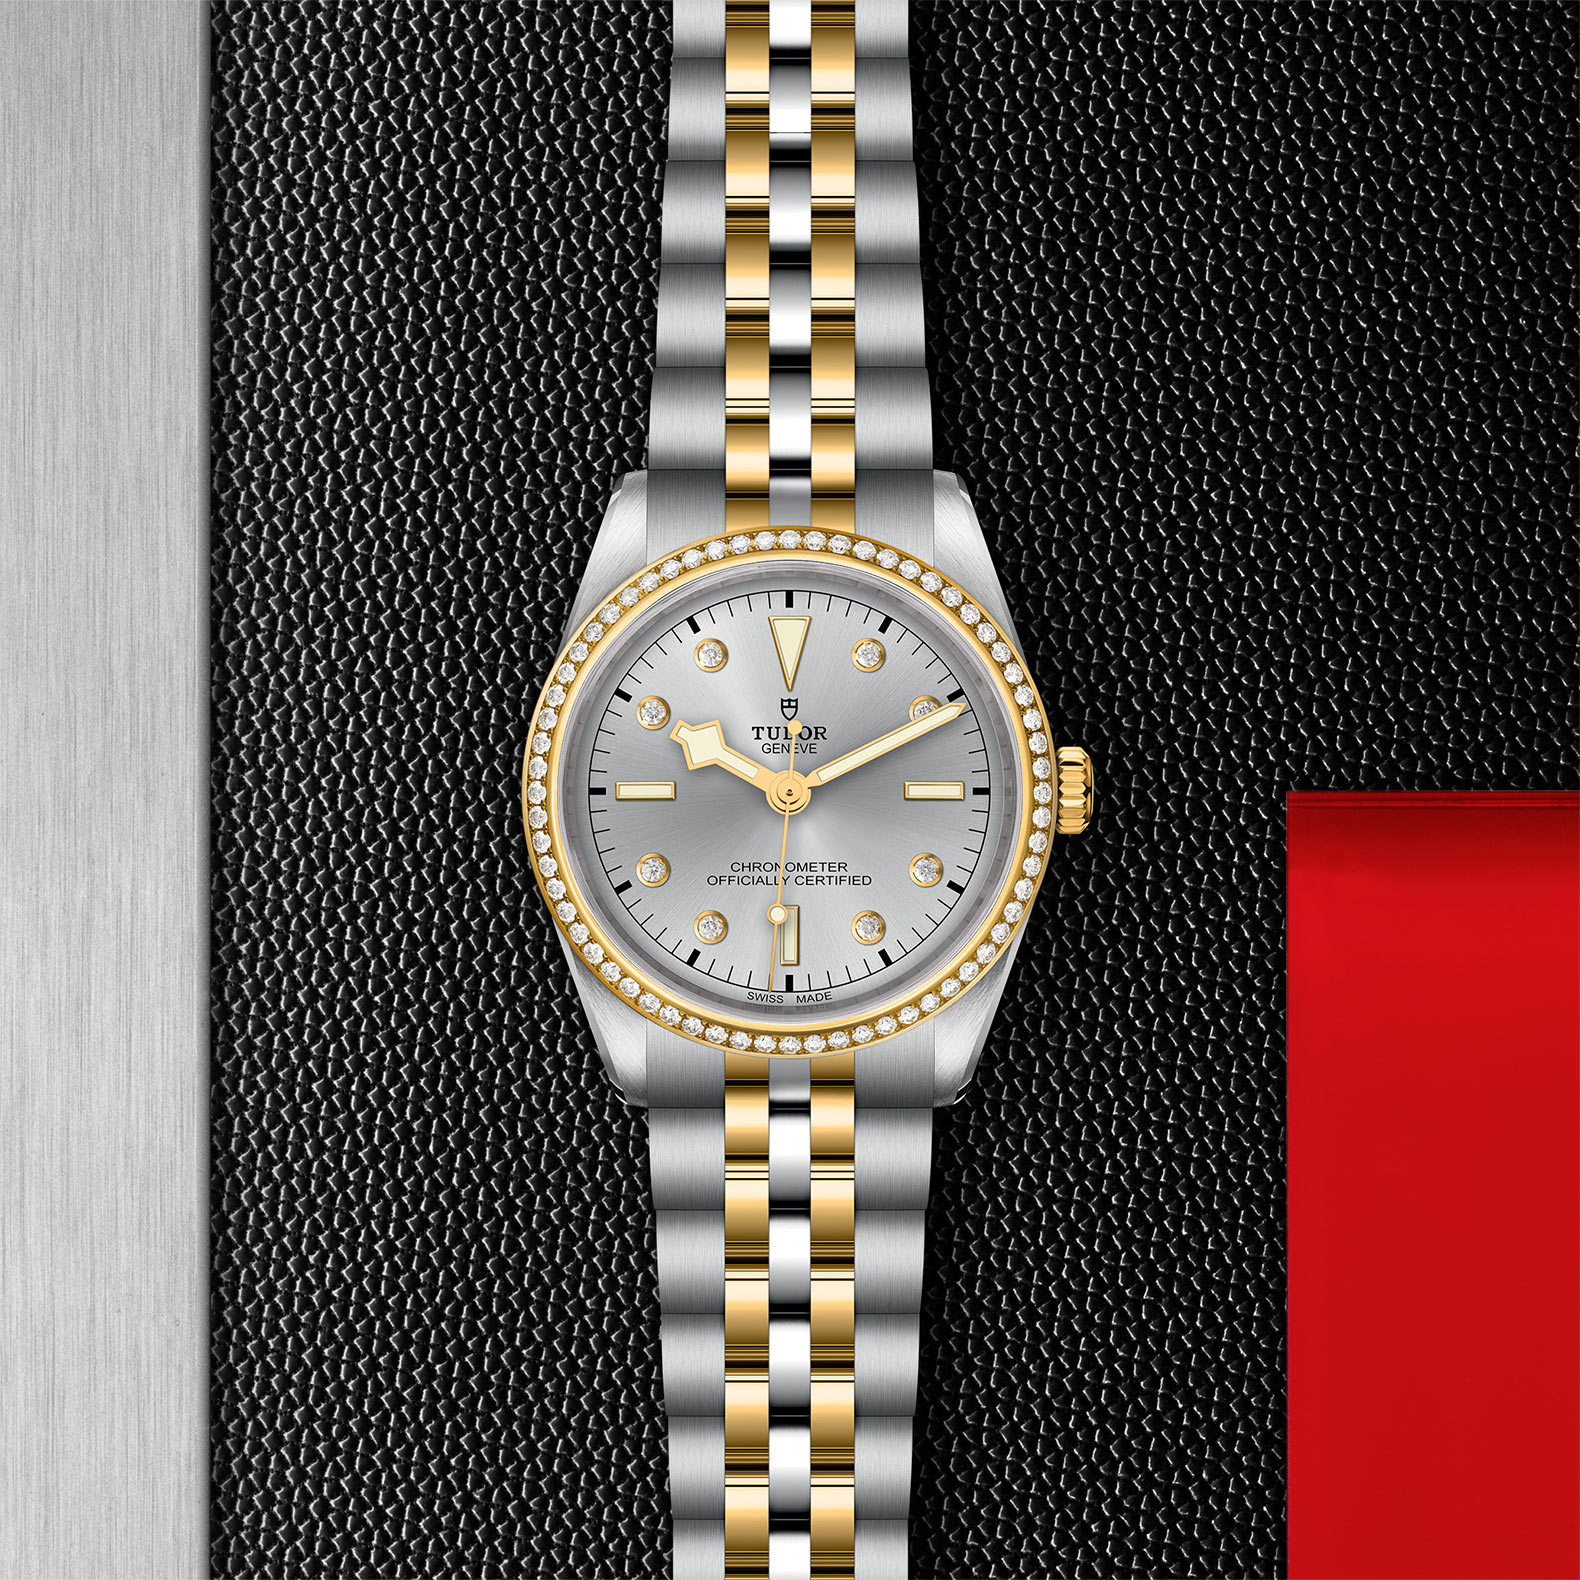 Tudor Watch Assets M79653 0006 Instore Flatlay